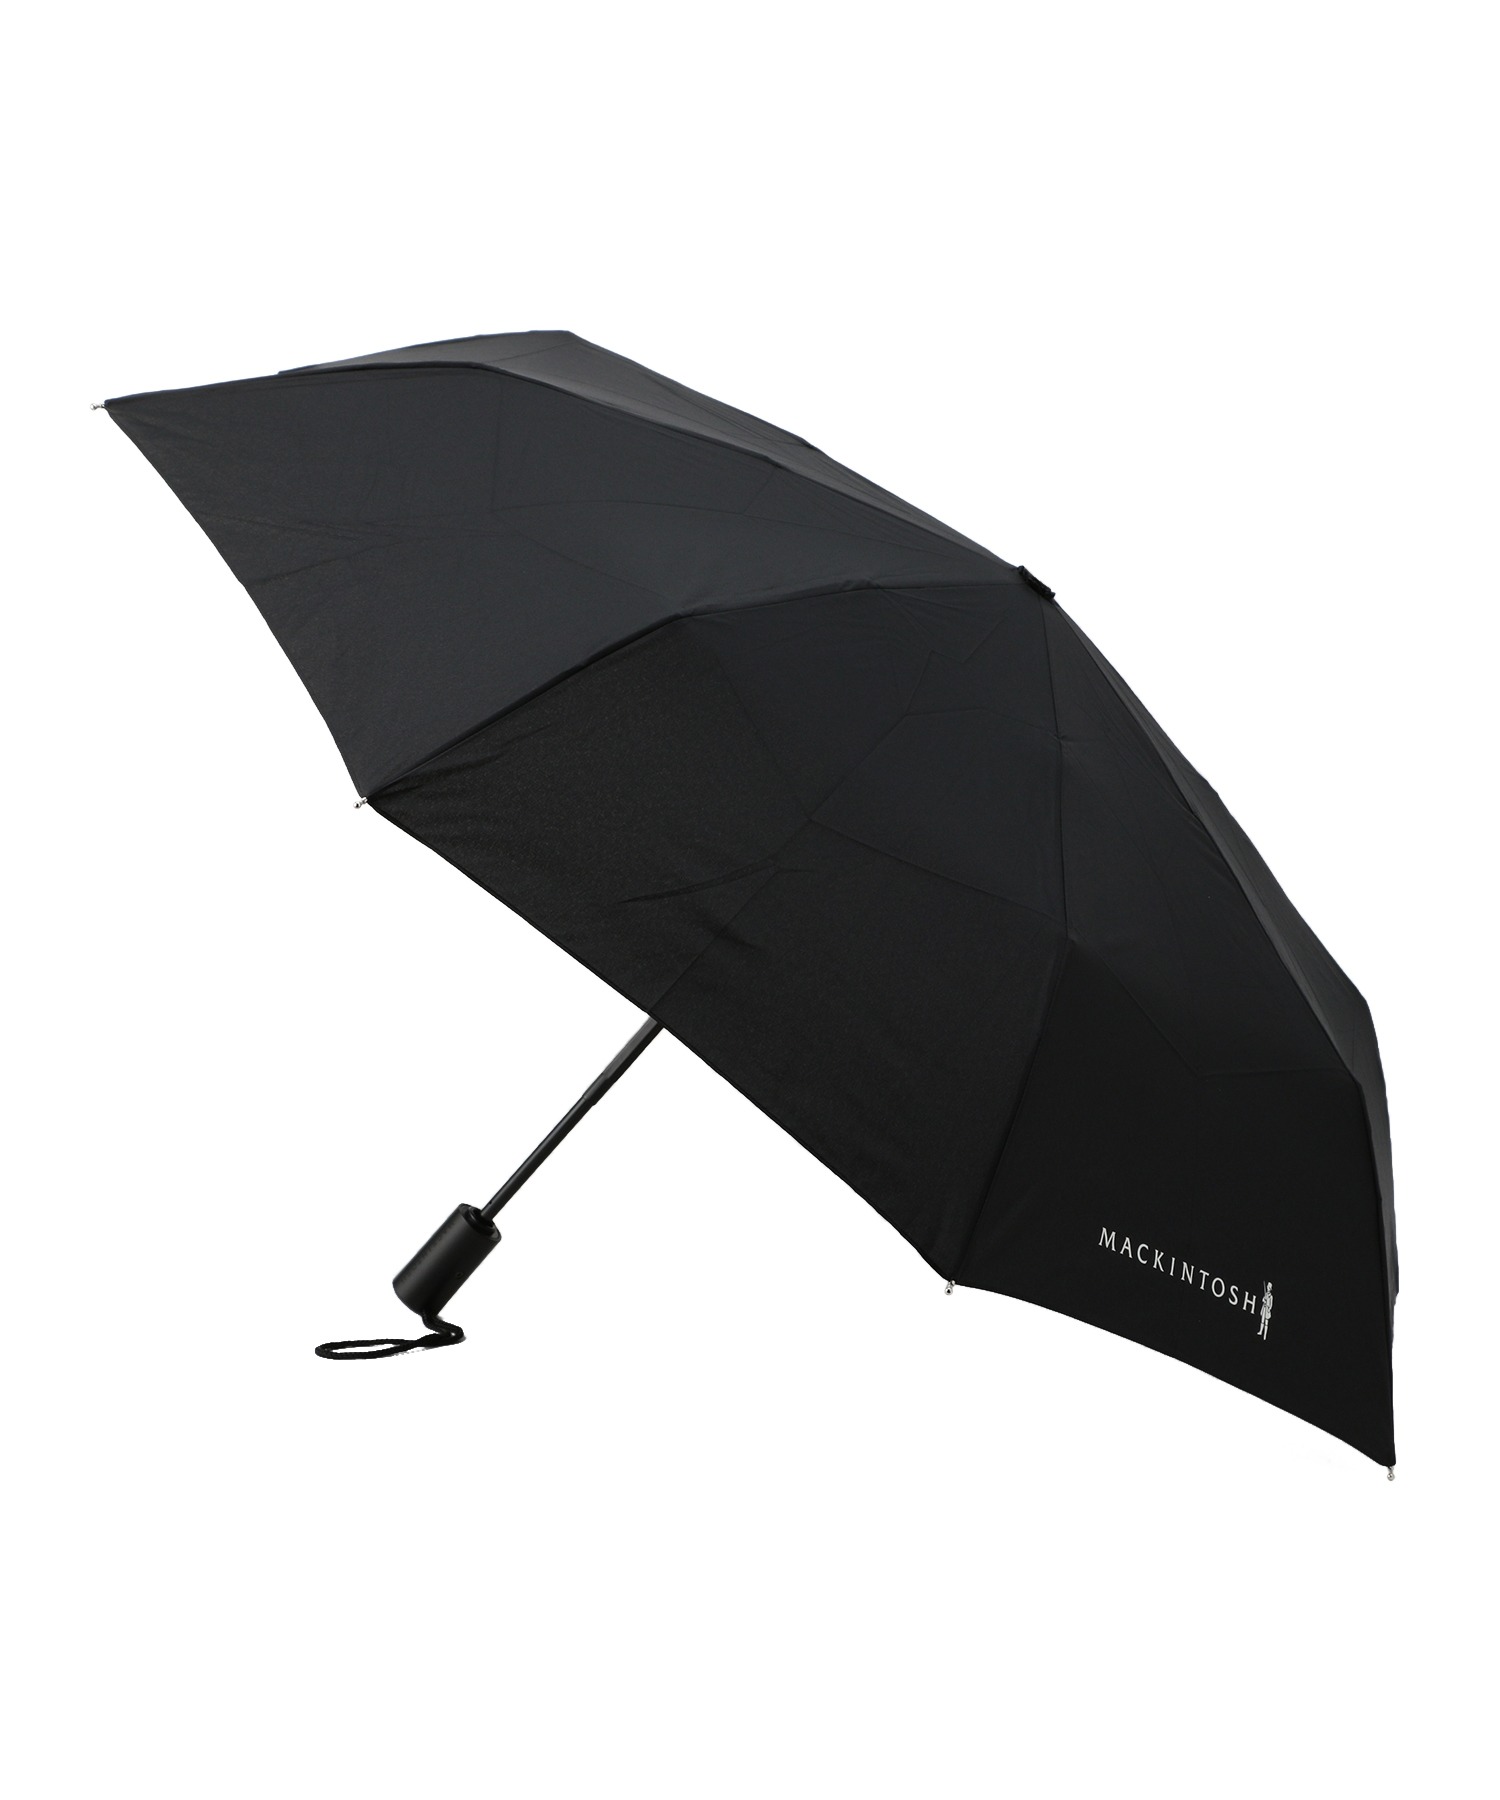 MACKINTOSH / 折りたたみ傘